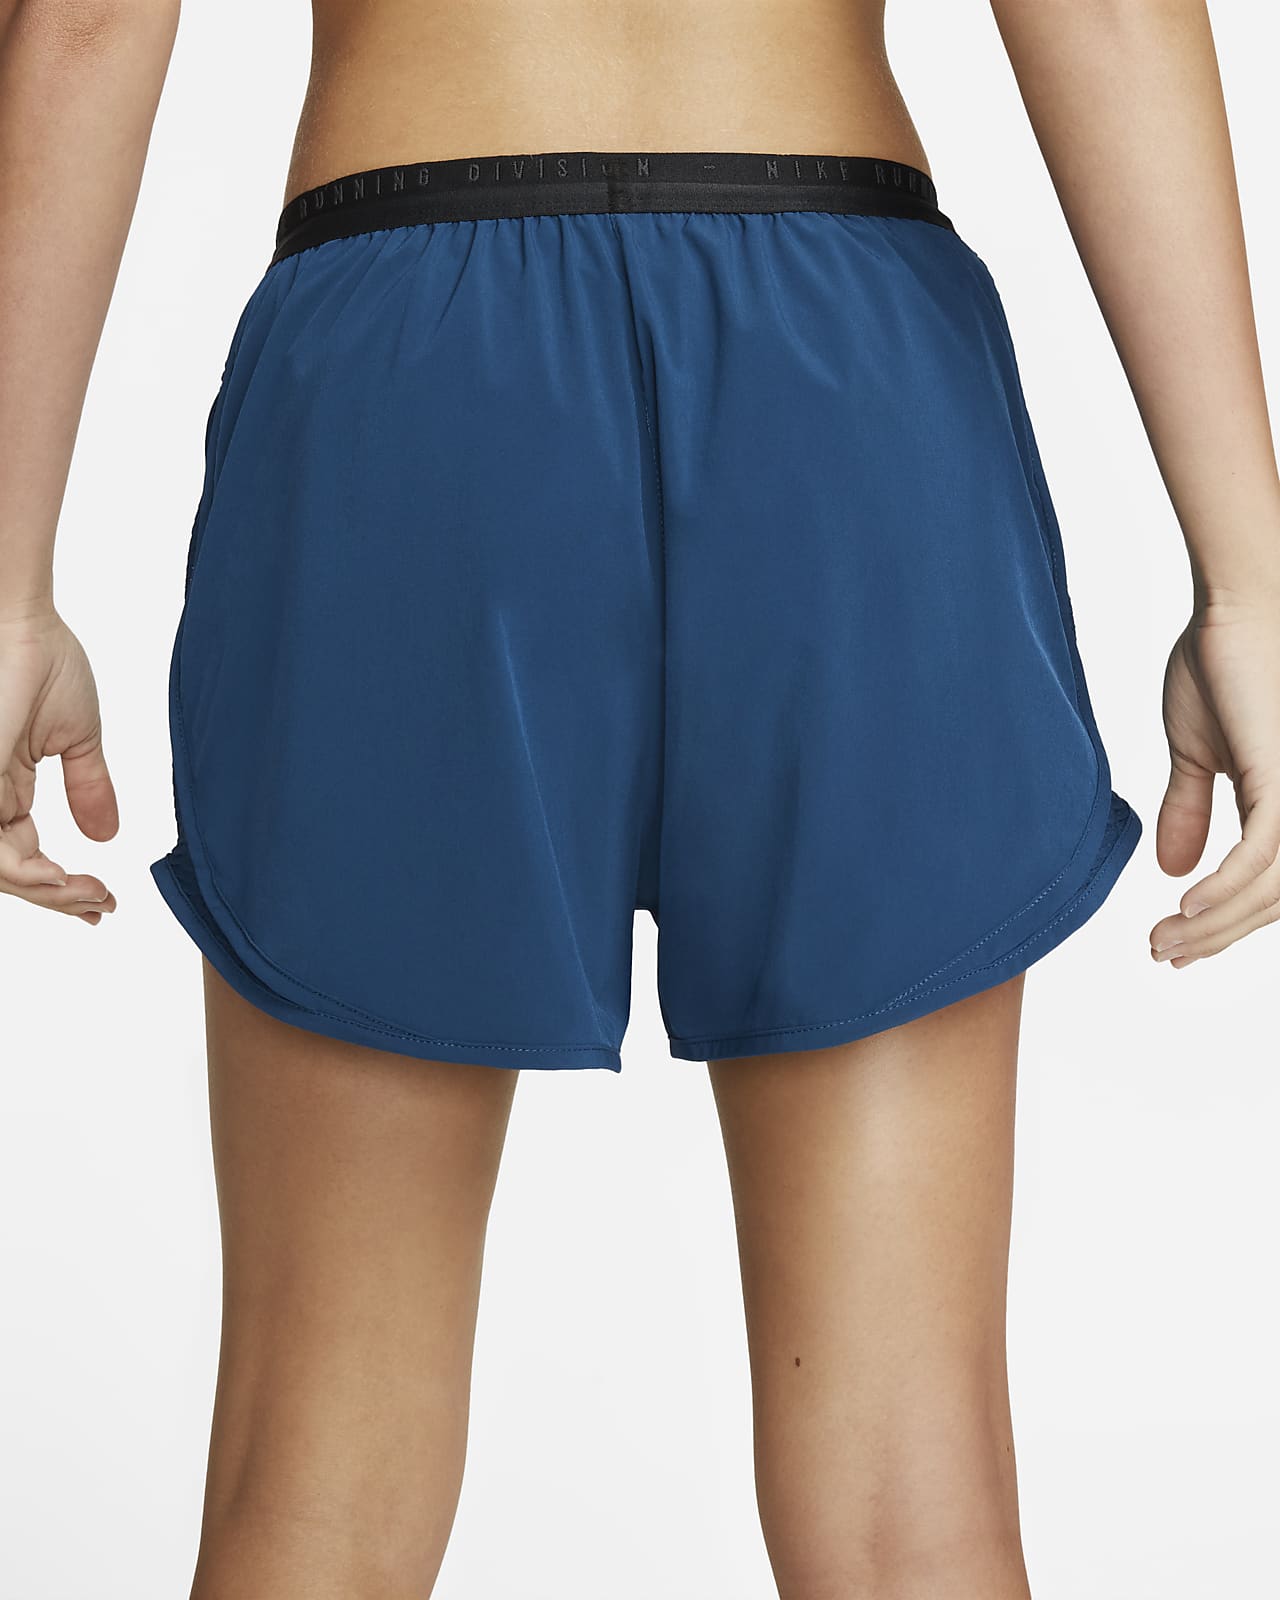 Women's Nike Dri-Fit Running Shorts  Running shorts women, White nike  shorts, Womens nike running shorts